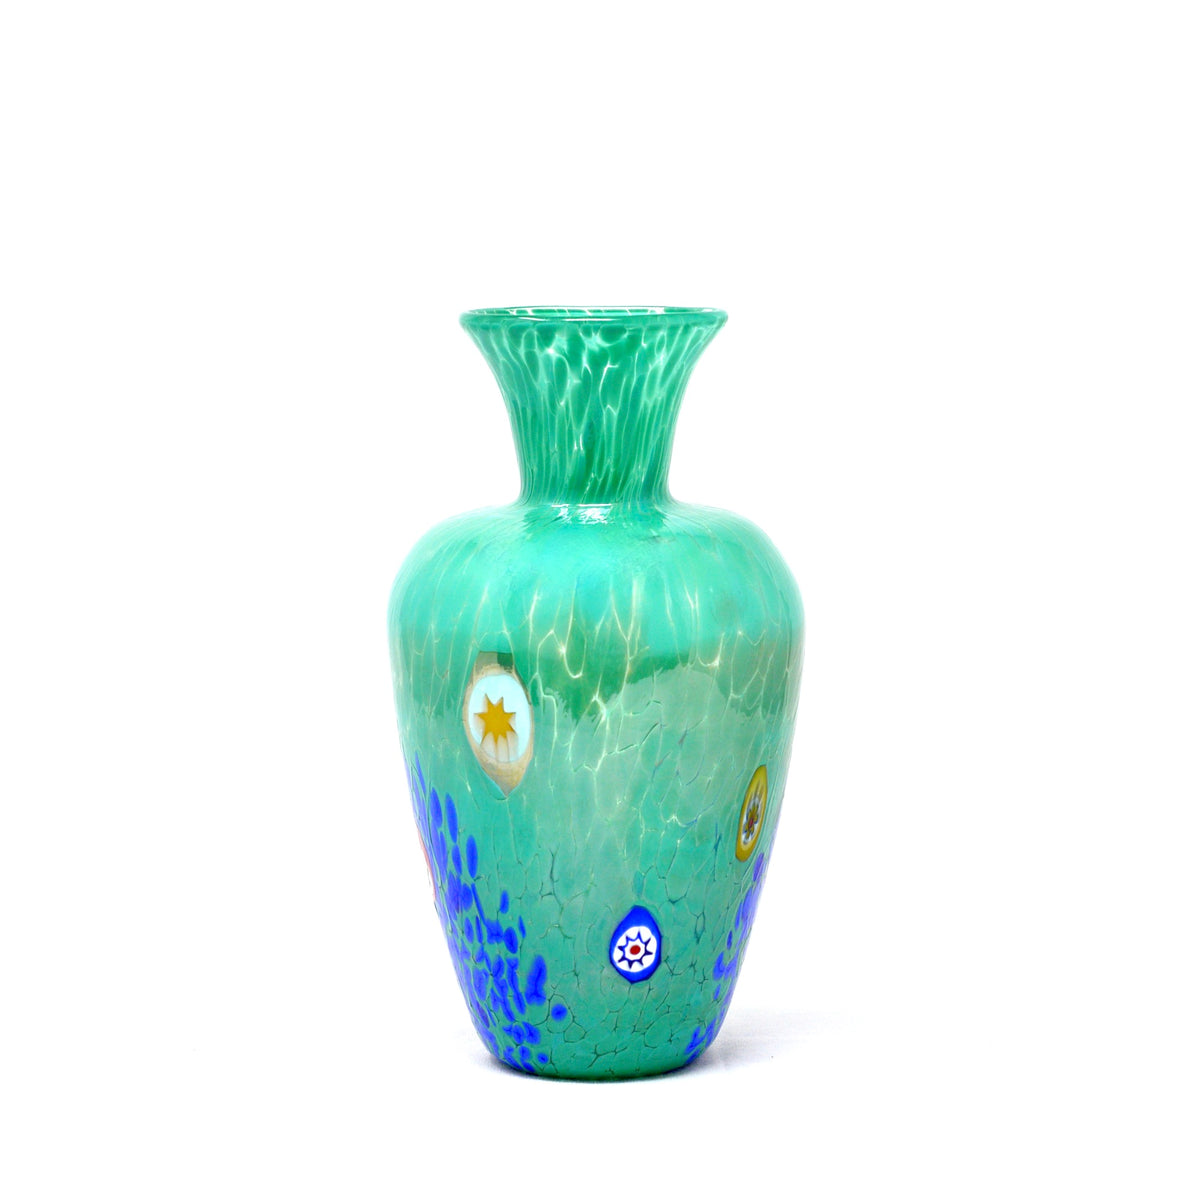 Amphora Large Vase, Handblown Millefiori Murano Glass, Made in Italy - My Italian Decor